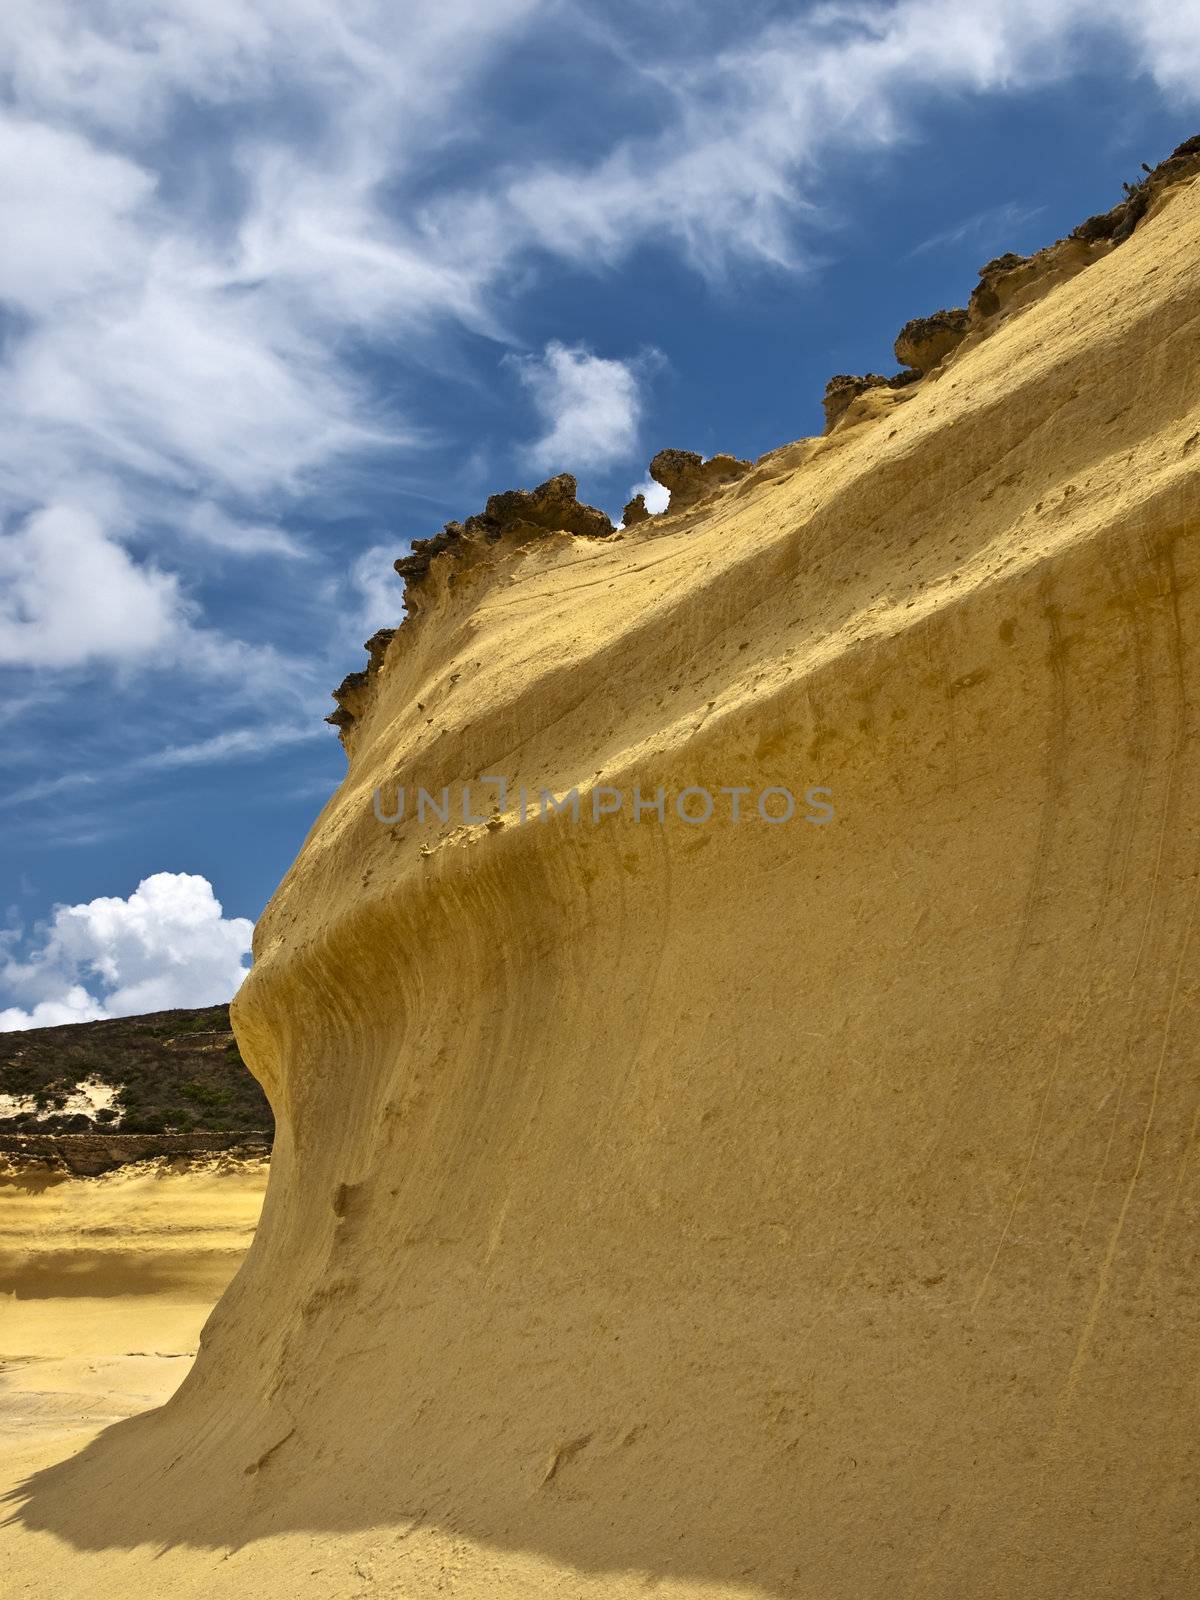 Sandstone Erosion by PhotoWorks